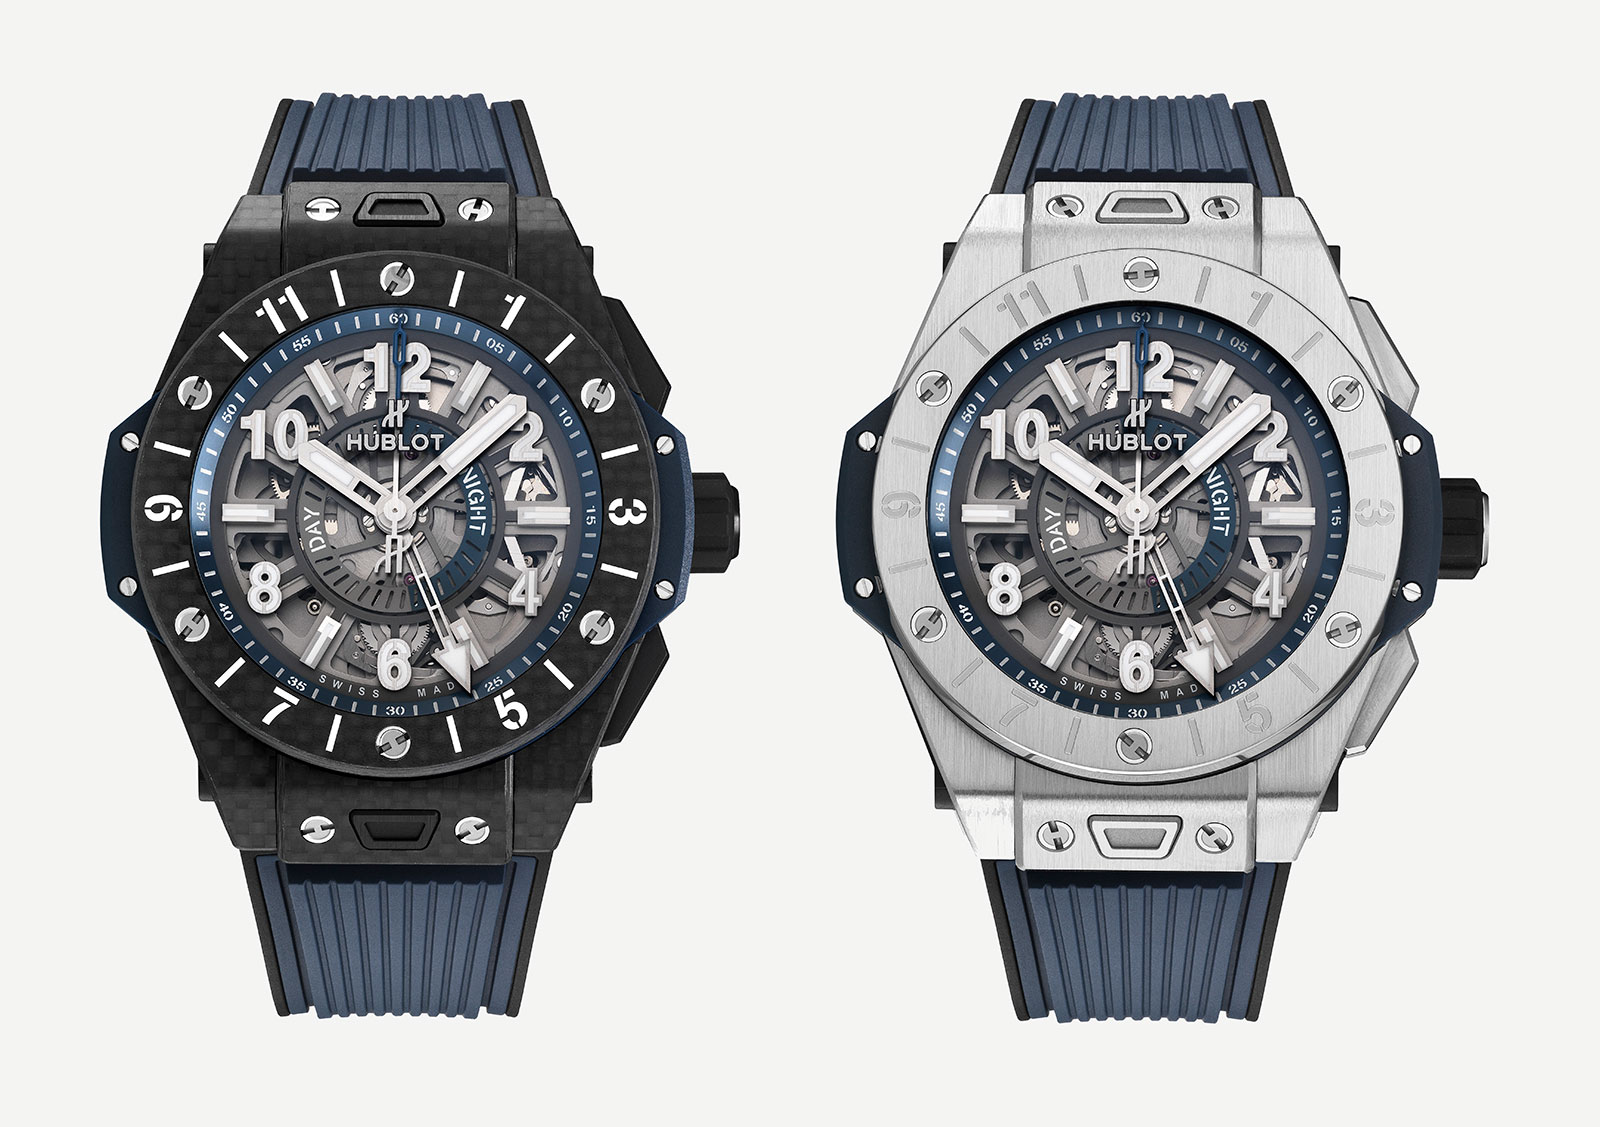 Big Bang Unico GMT Carbon hublot smartwatch announced luxury smartwatch